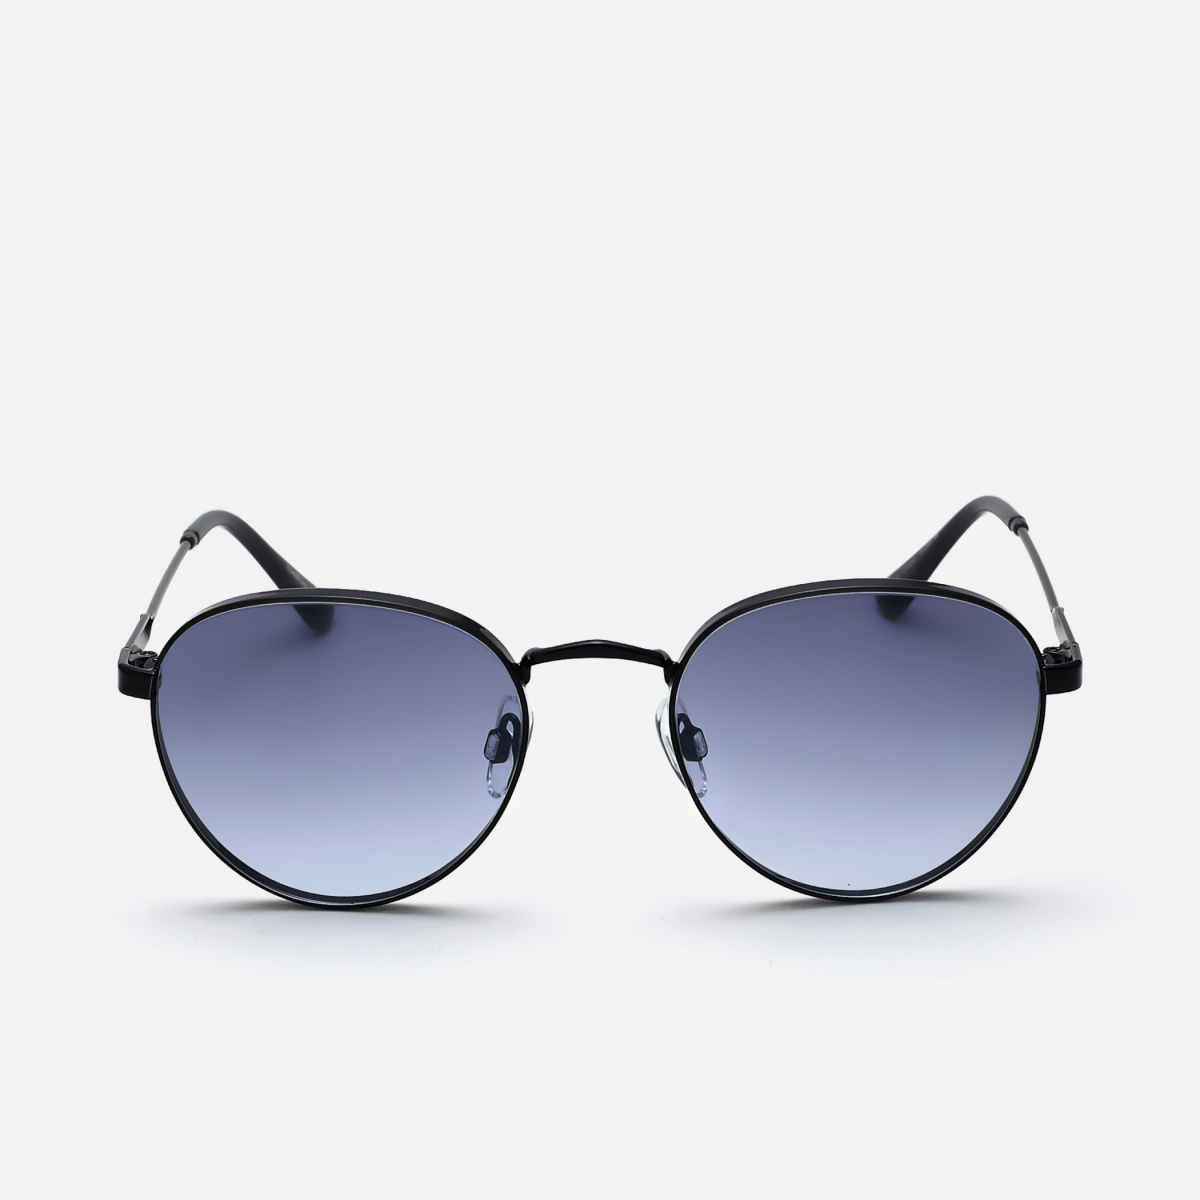 BEBE Women UV-Protected Round Sunglasses - BEBE3043C1S